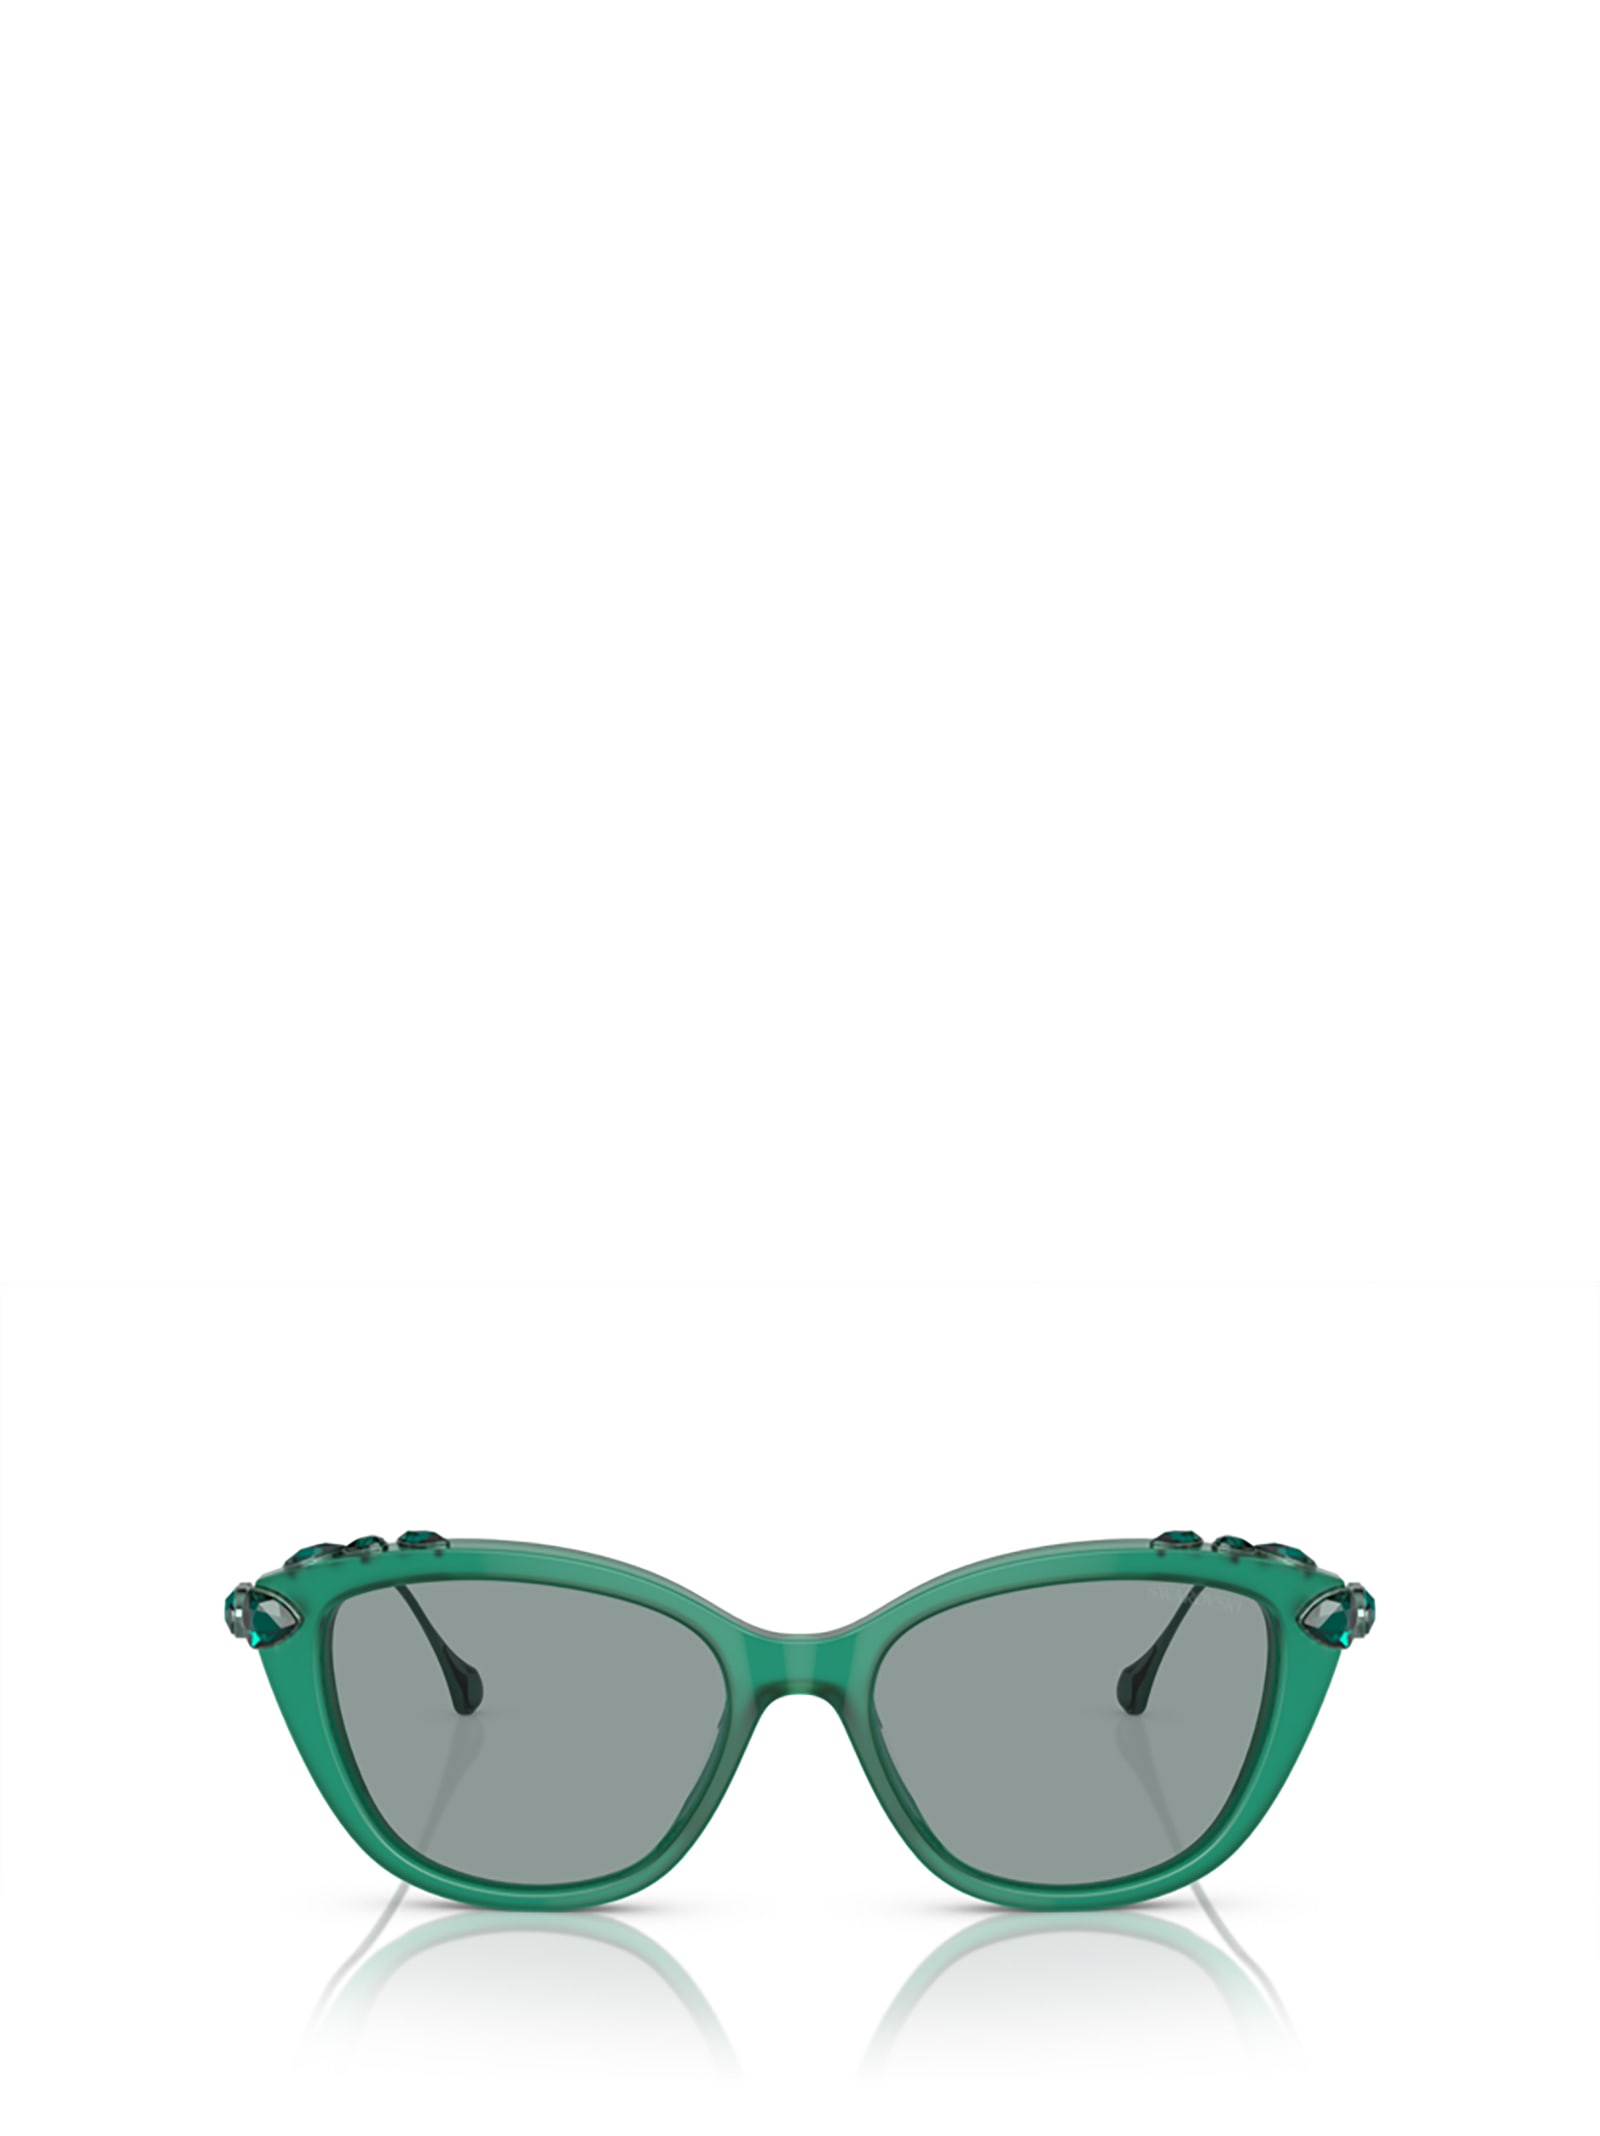 swarovski sk6010 opal green sunglasses